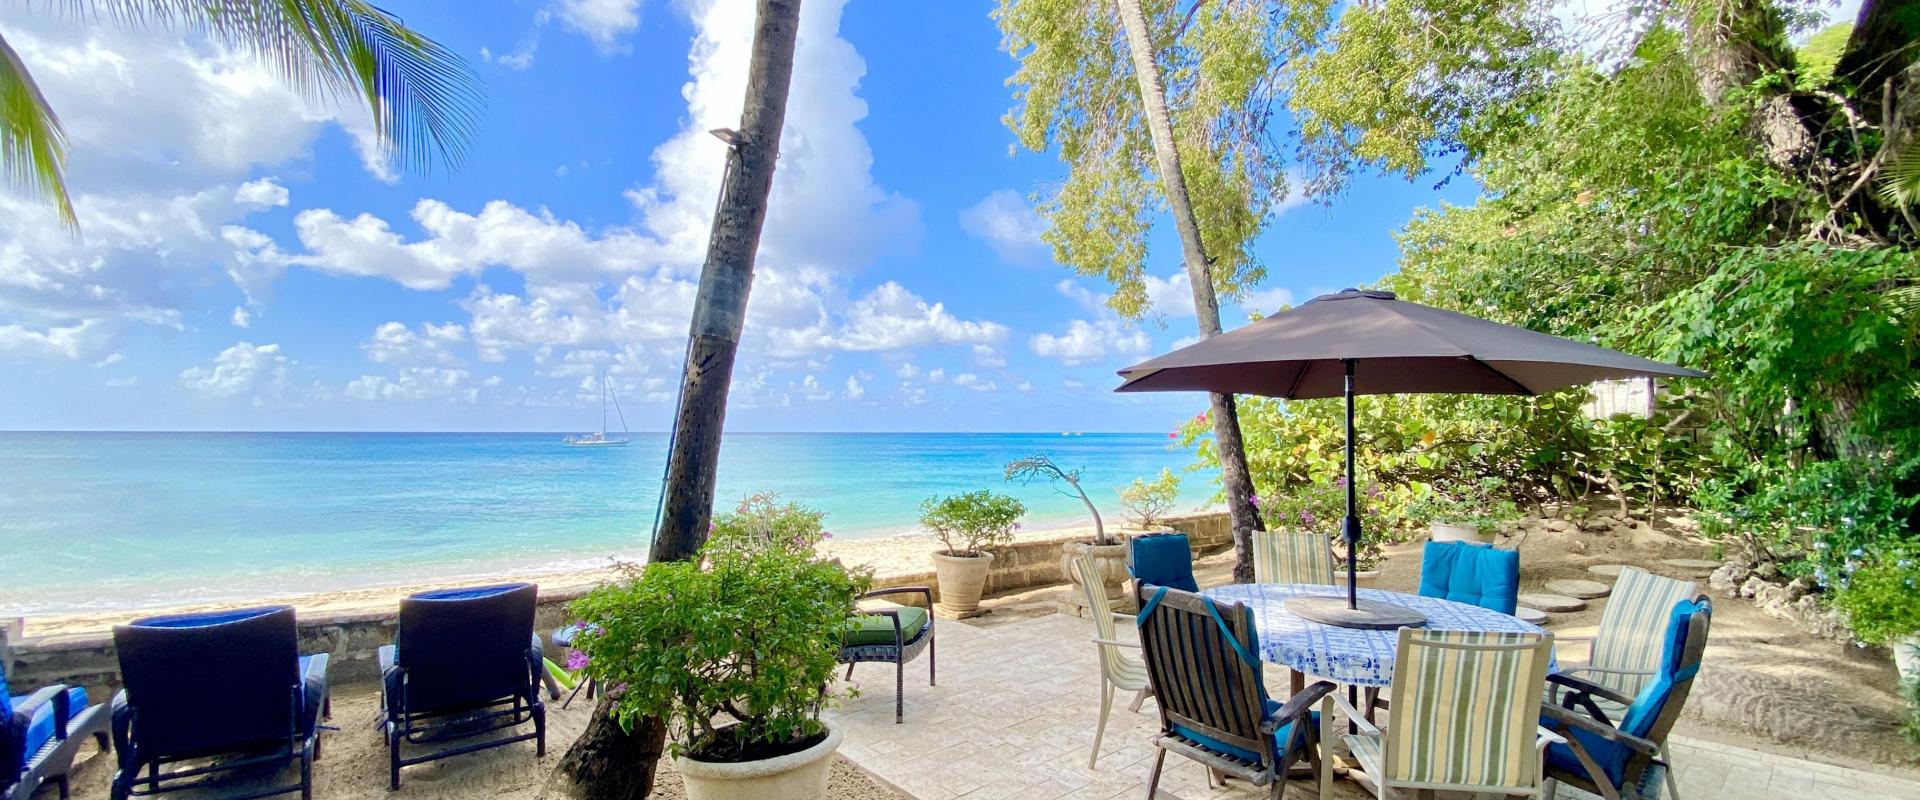 Beachfront Barbados Villa Rental Seascape Beach and Lounger Views